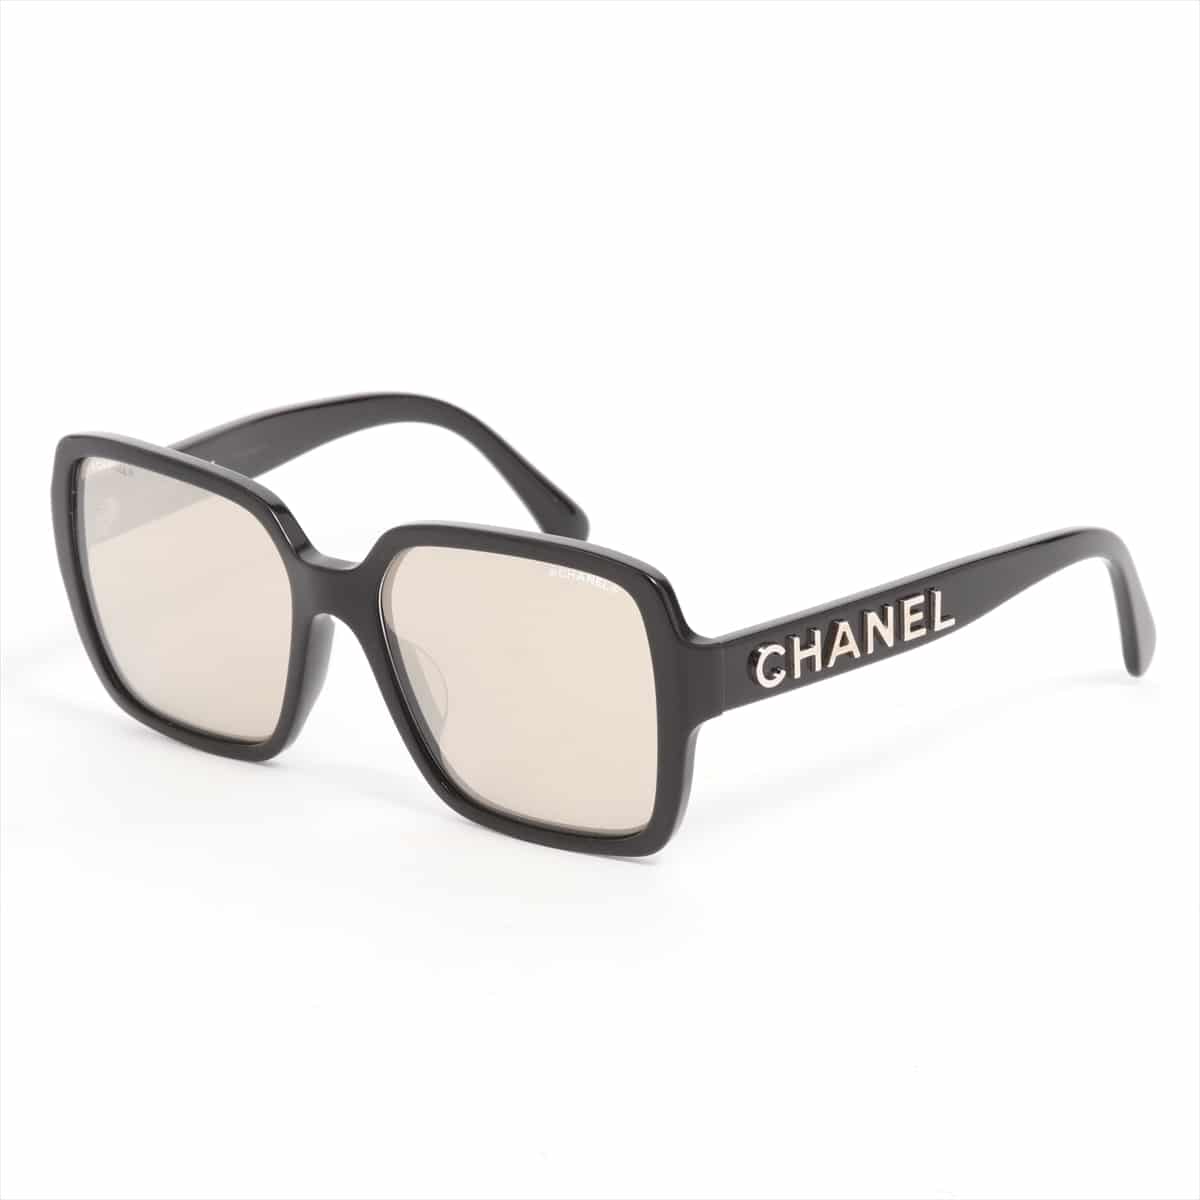 Chanel 5408-A Sunglass Plastic Black